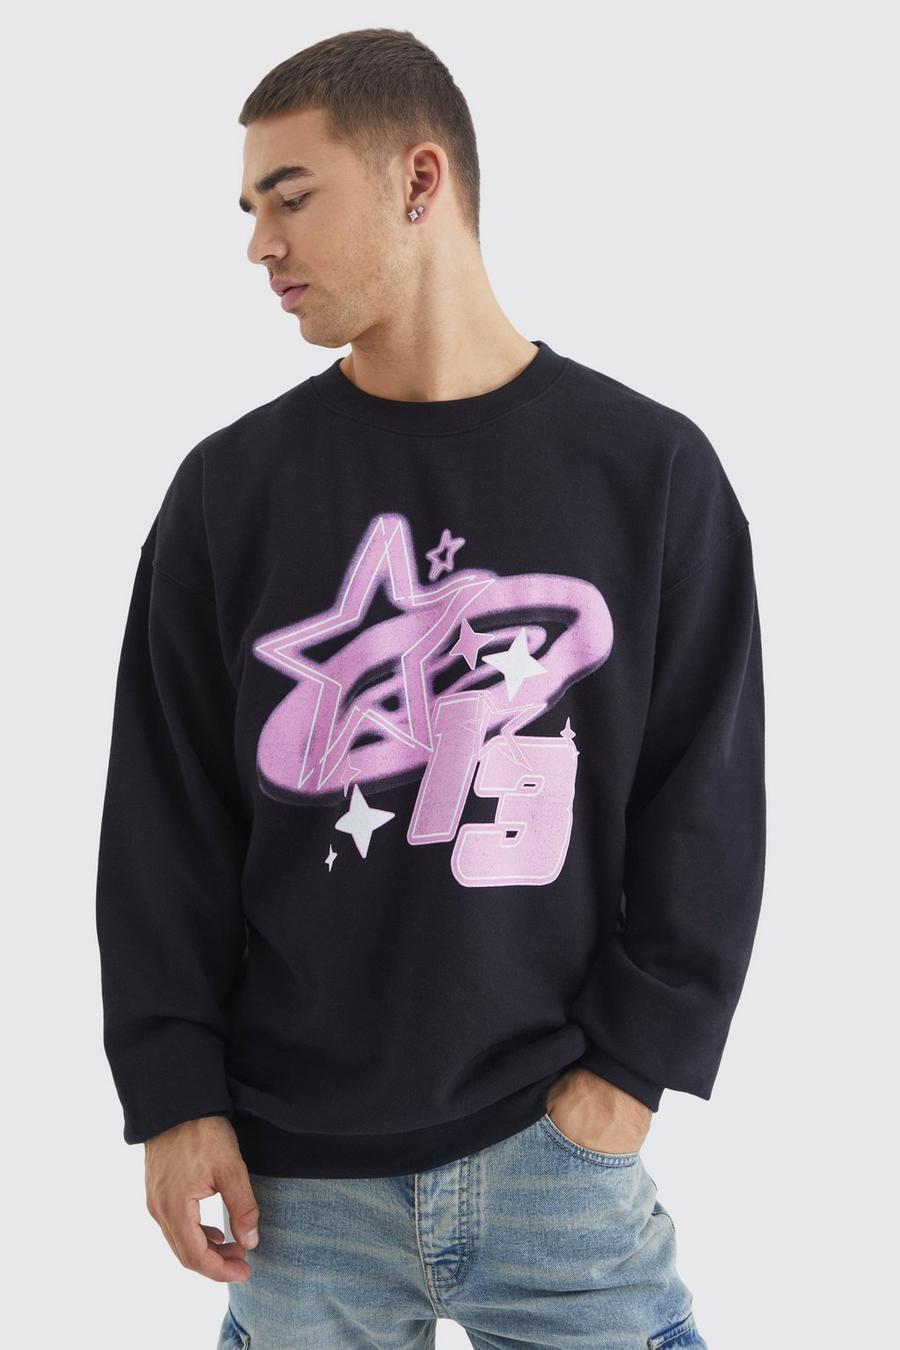 Black Oversized Limited Edition Graphic Sweatshirt